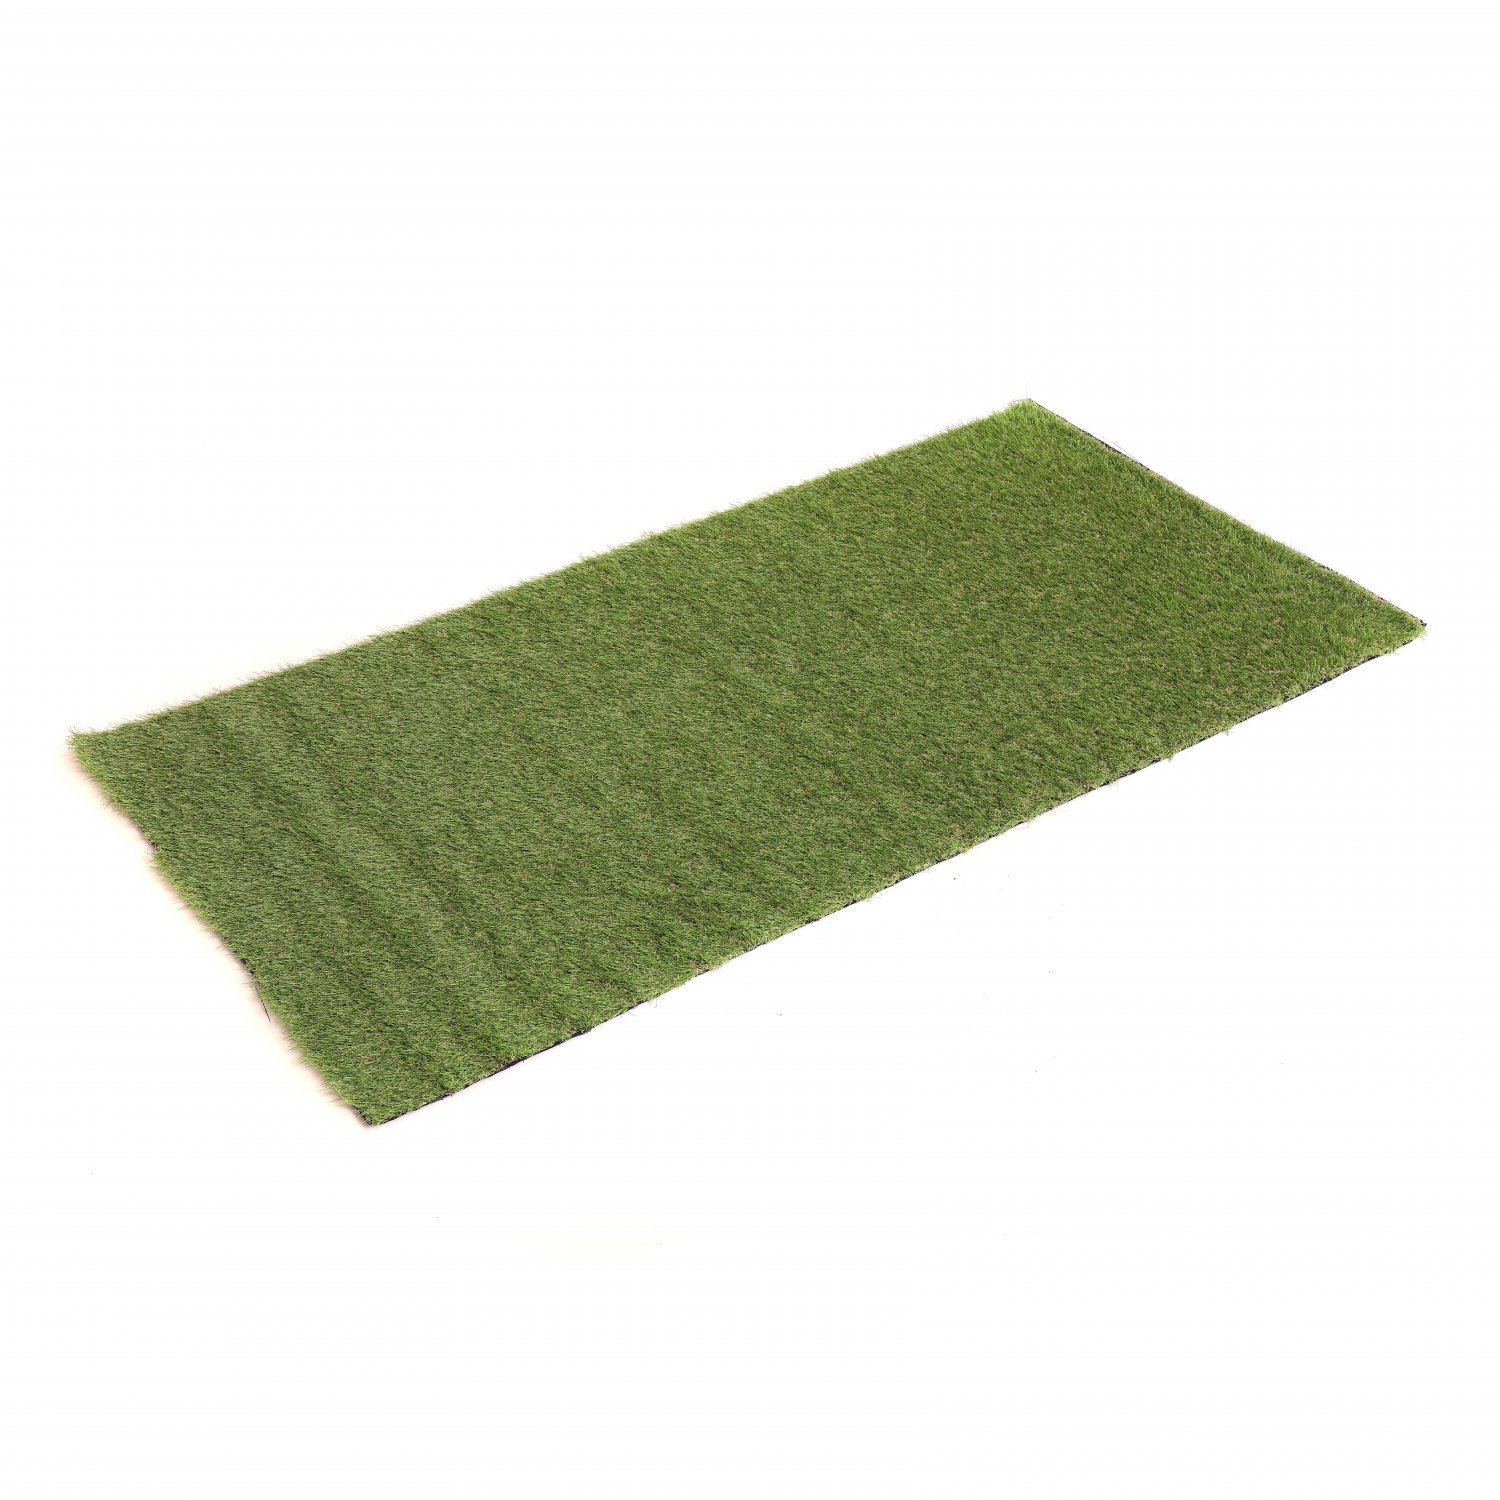 6ft x 3ft Plastic Grass Greengrocer Camping Quality Artificial Grass Mat 